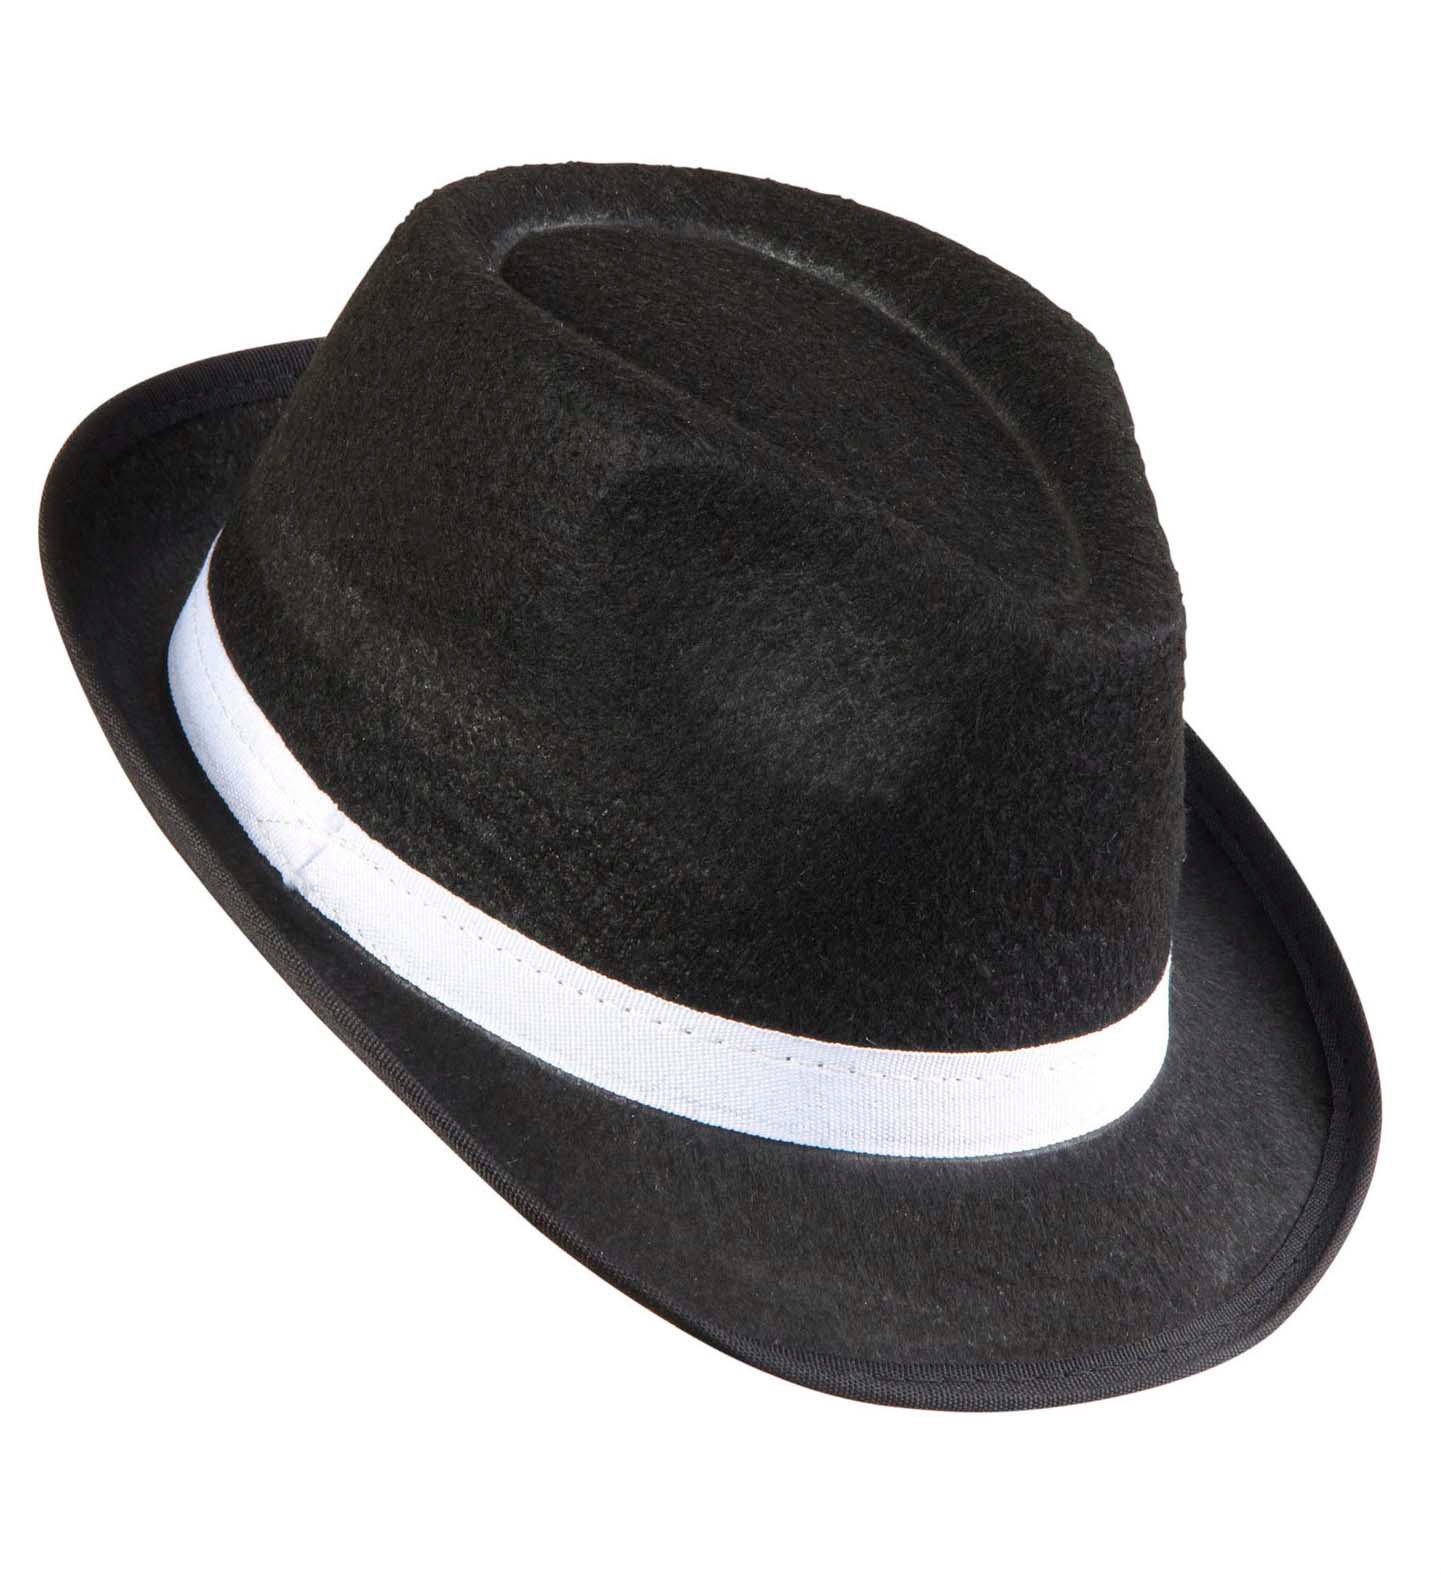 Шляпа директора. Мужская шляпа Borsalino мафии. Шляпа Аль Капоне. Шляпа гангстера. Шляпа черная.